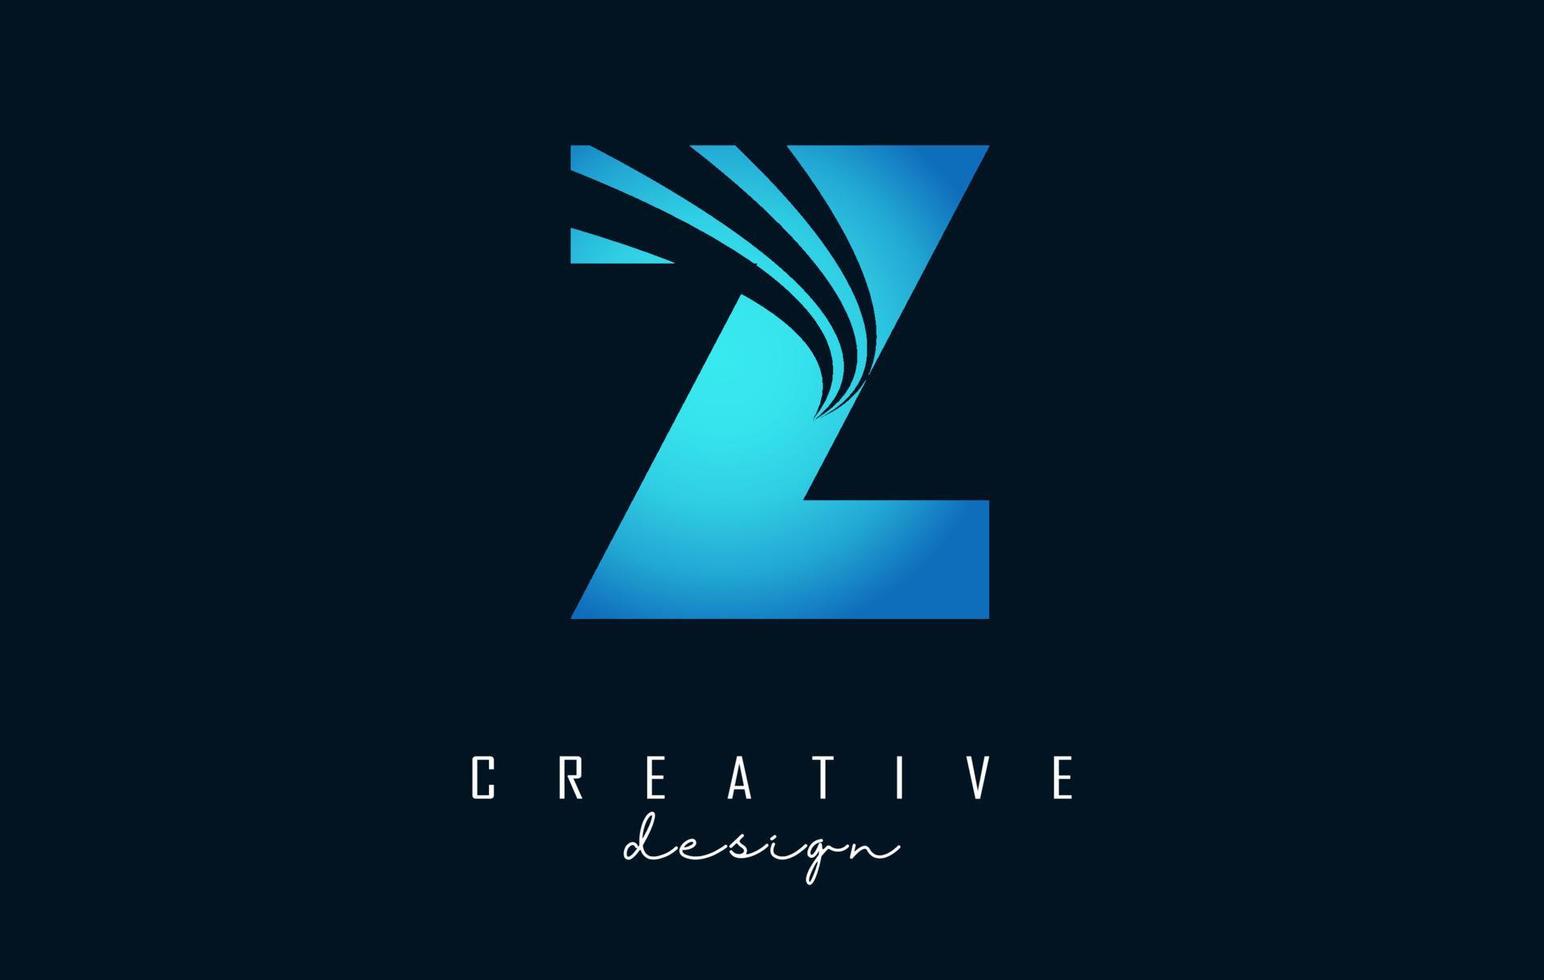 kreativ bokstav z-logotyp med ledande linjer och vägkonceptdesign. bokstaven z med geometrisk design. vektor